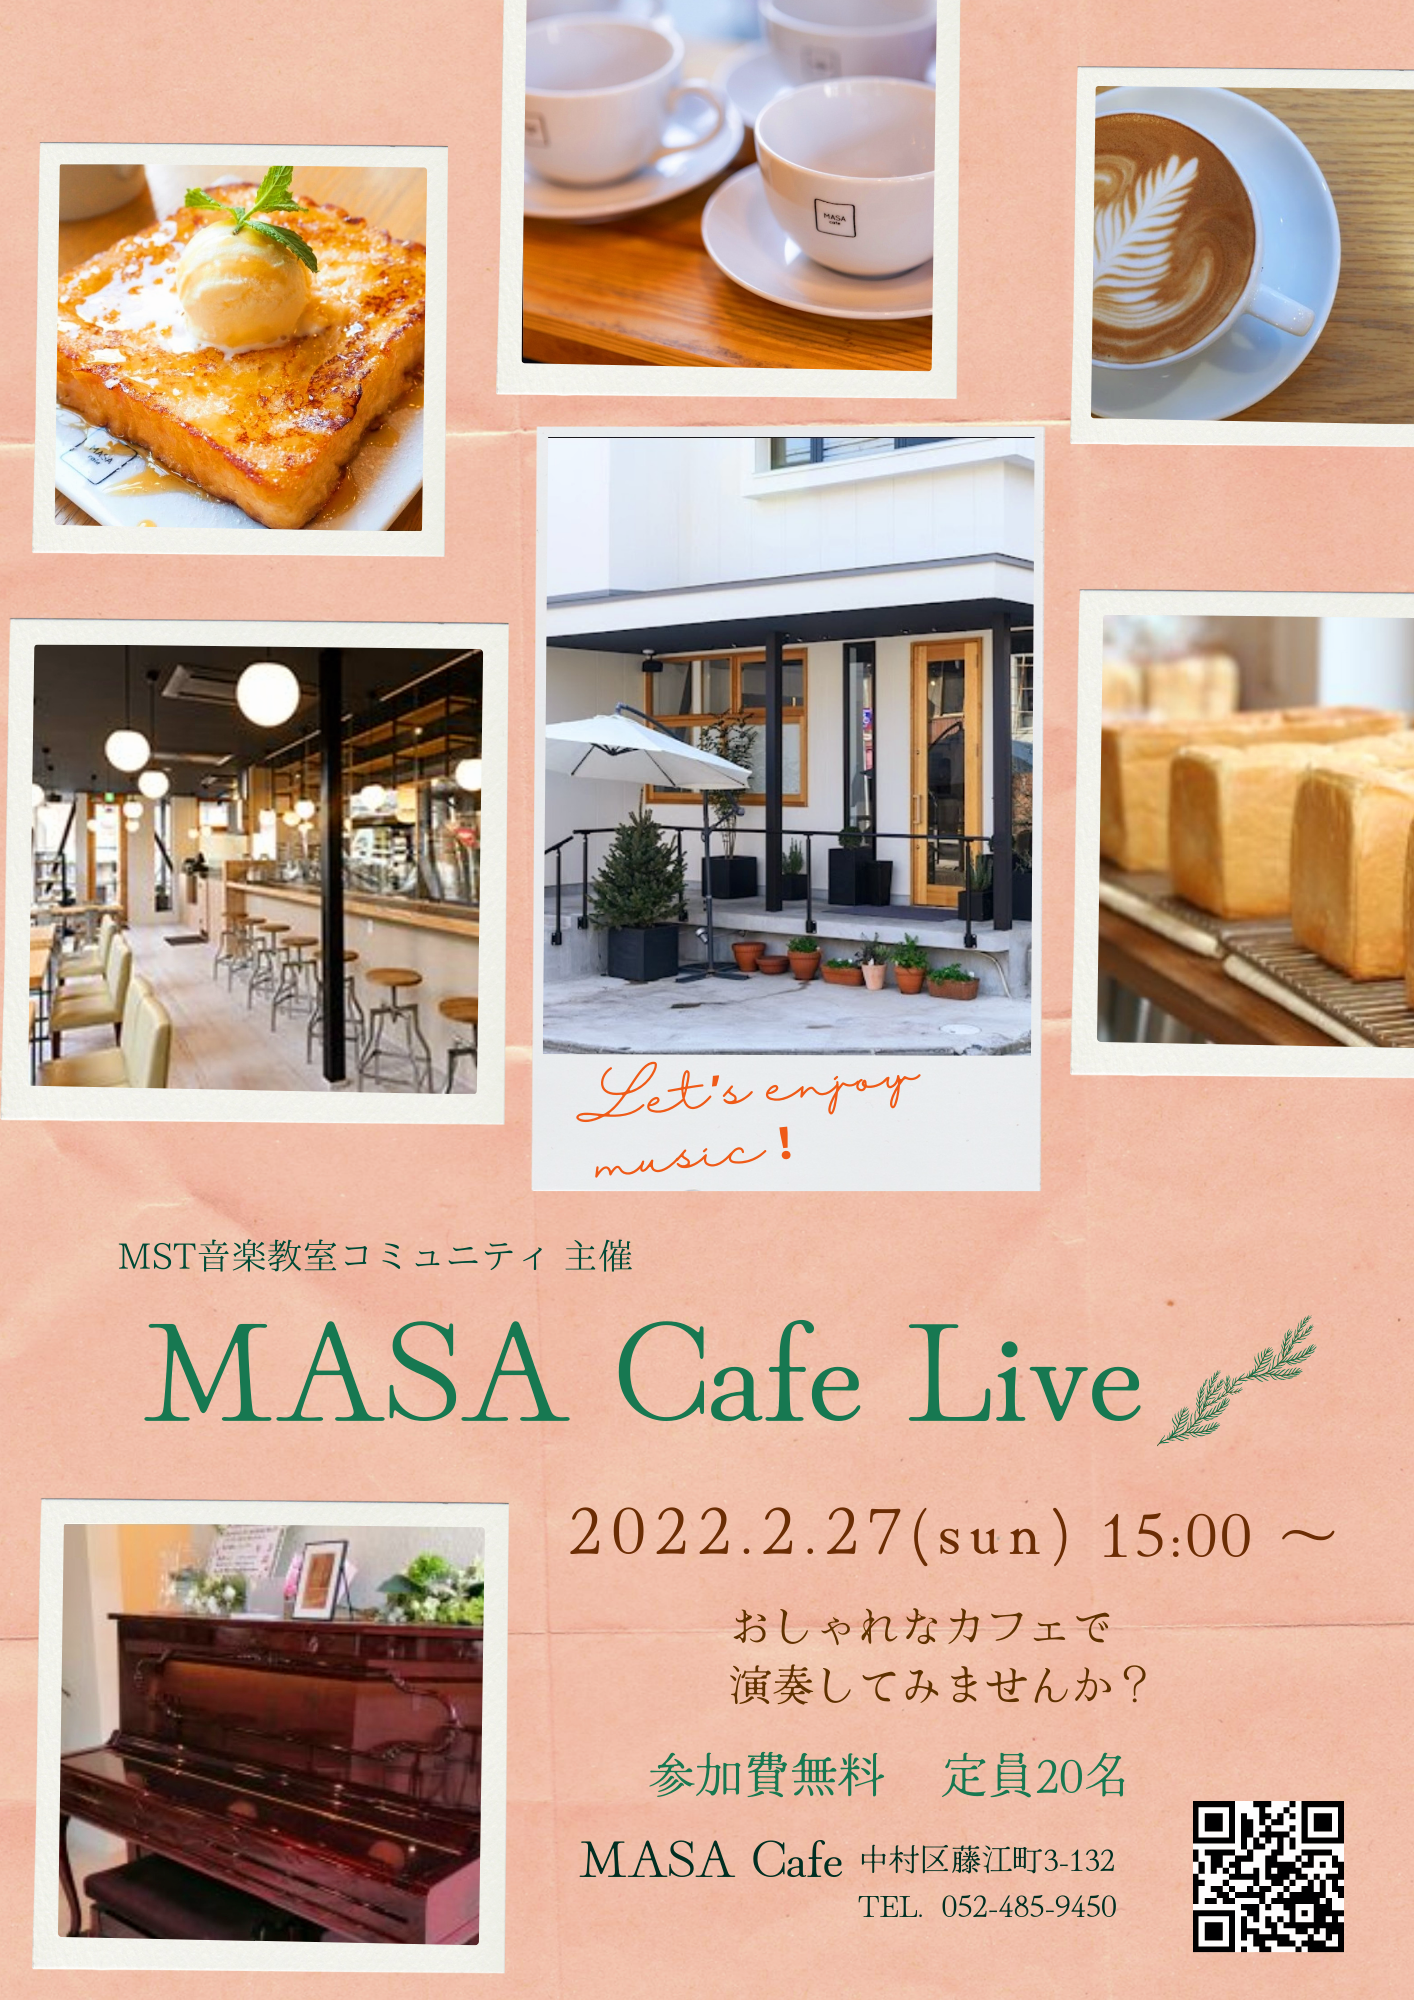 MASA Cafe Live 開催のお知らせ 🎹🎶